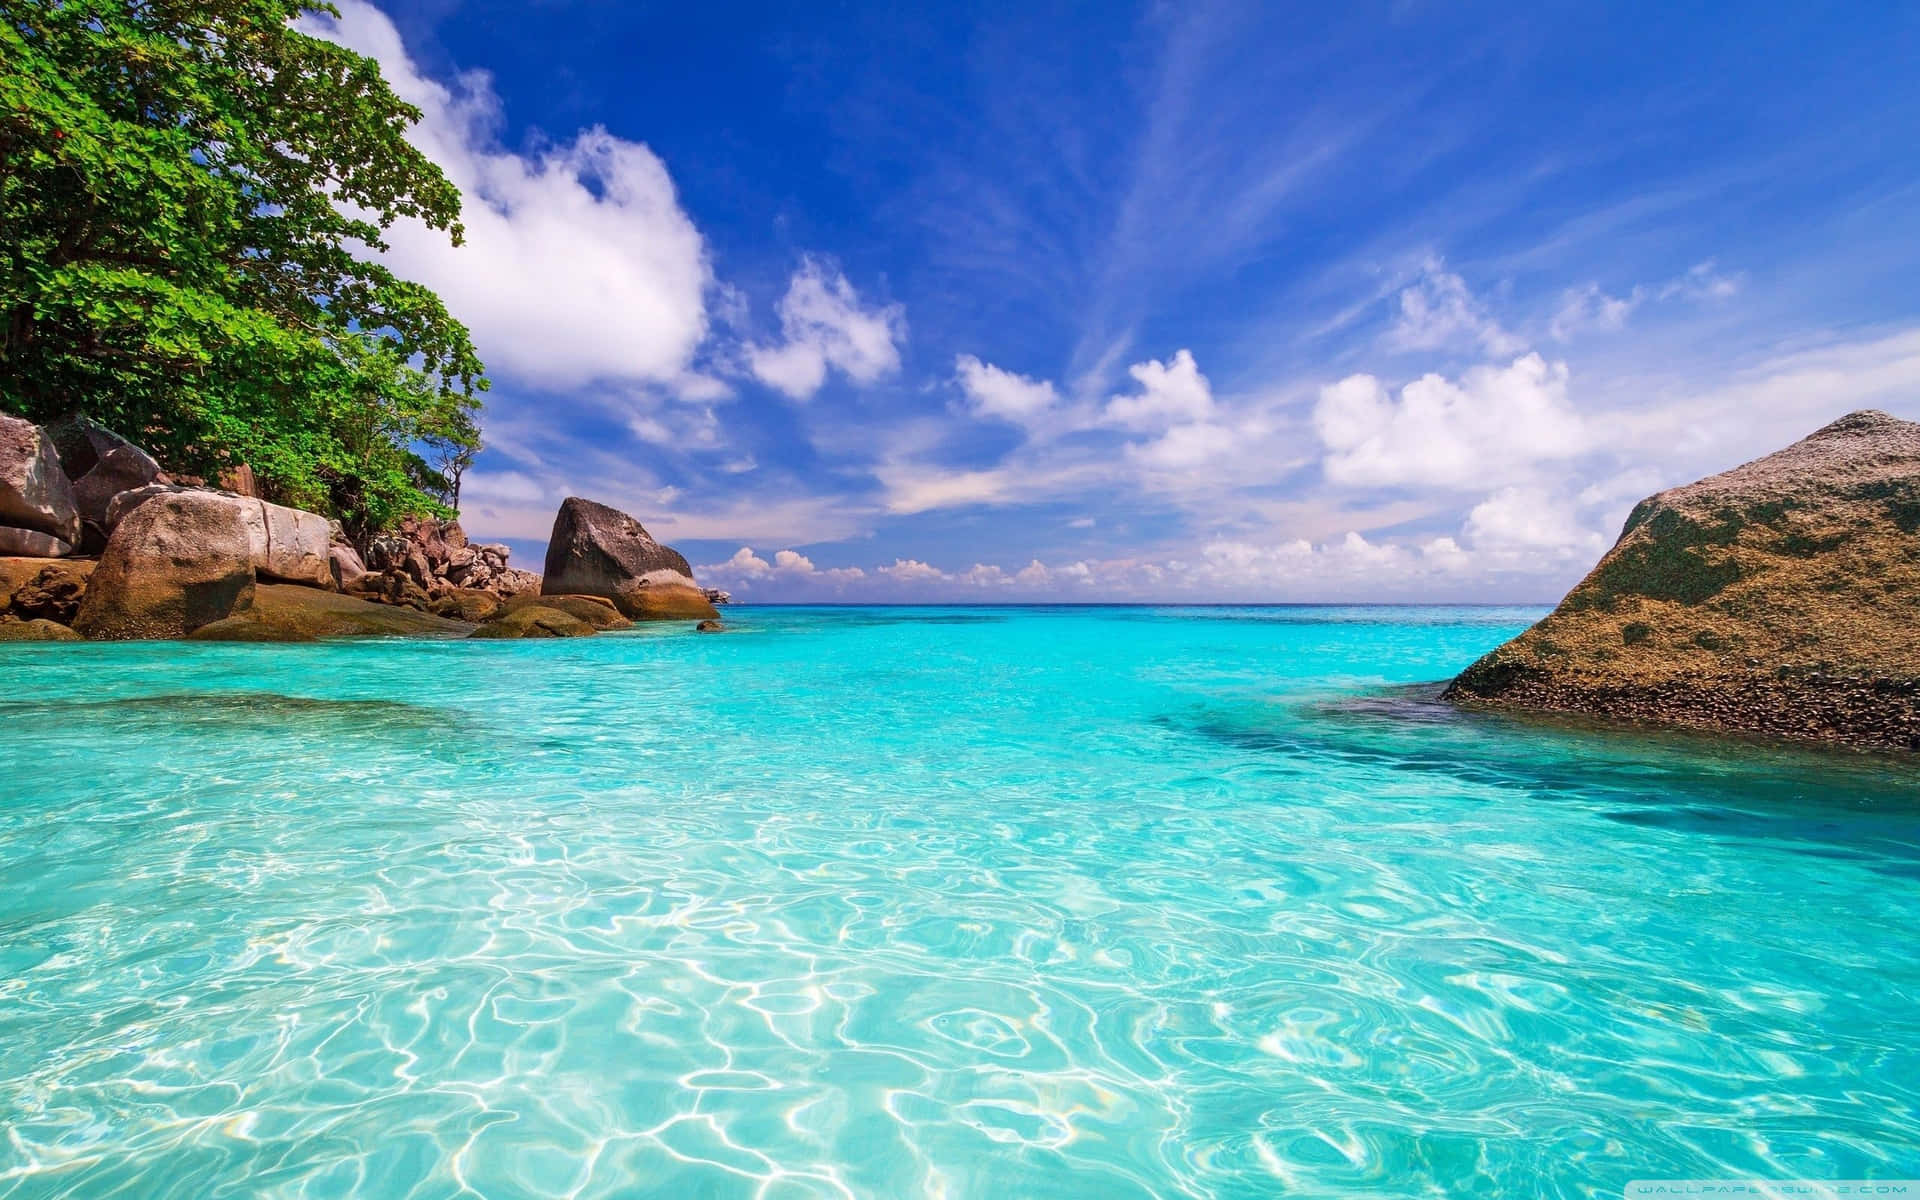 Paradise awaits on this dreamy beach paradise Wallpaper